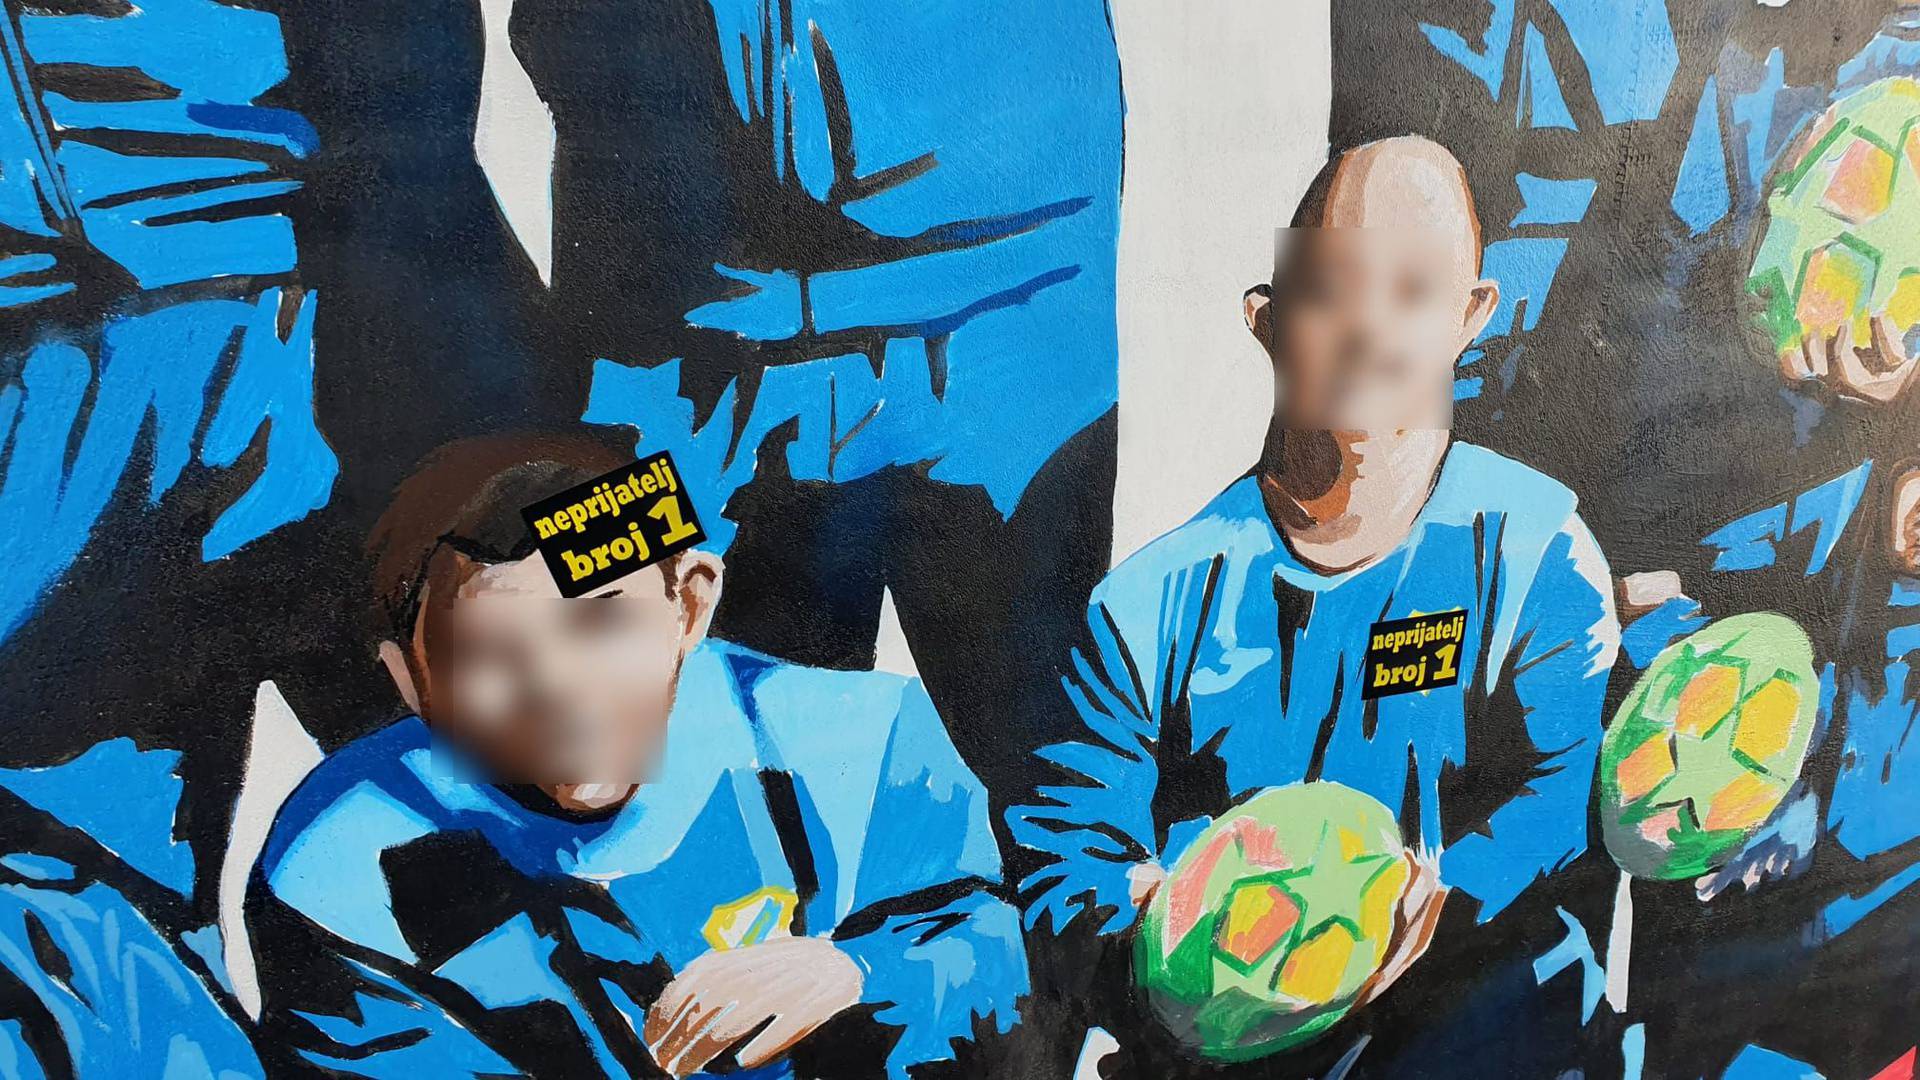 Torcida na grafit djece s Down sindromom na Rujevici lijepila naljepnice "Neprijatelj broj 1"